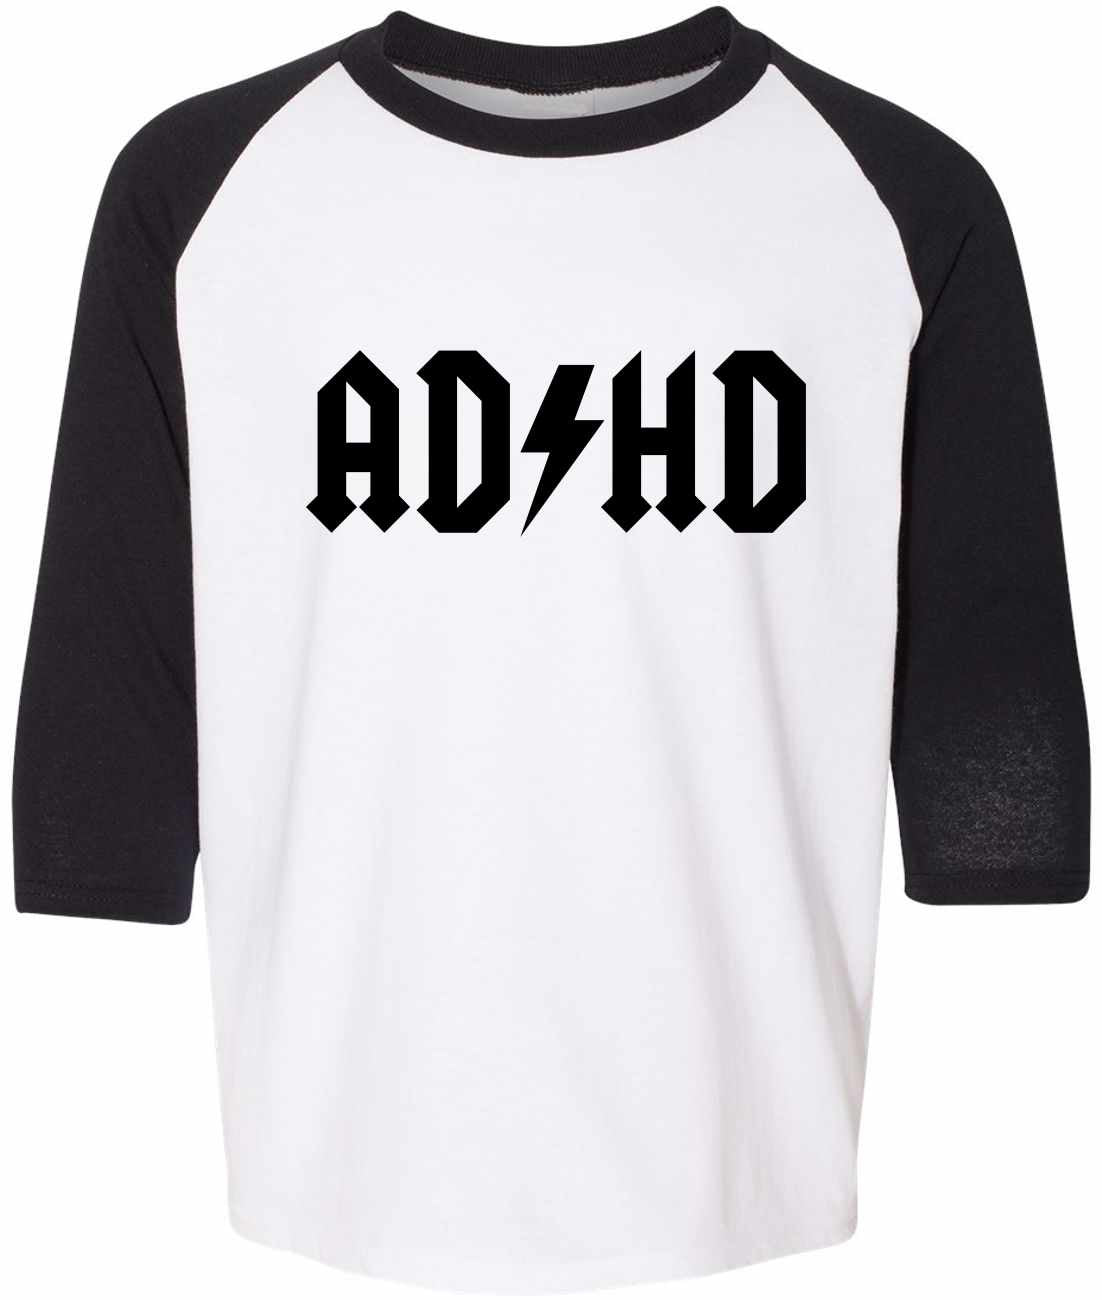 ADHD on Youth Baseball Shirt (#828-212)